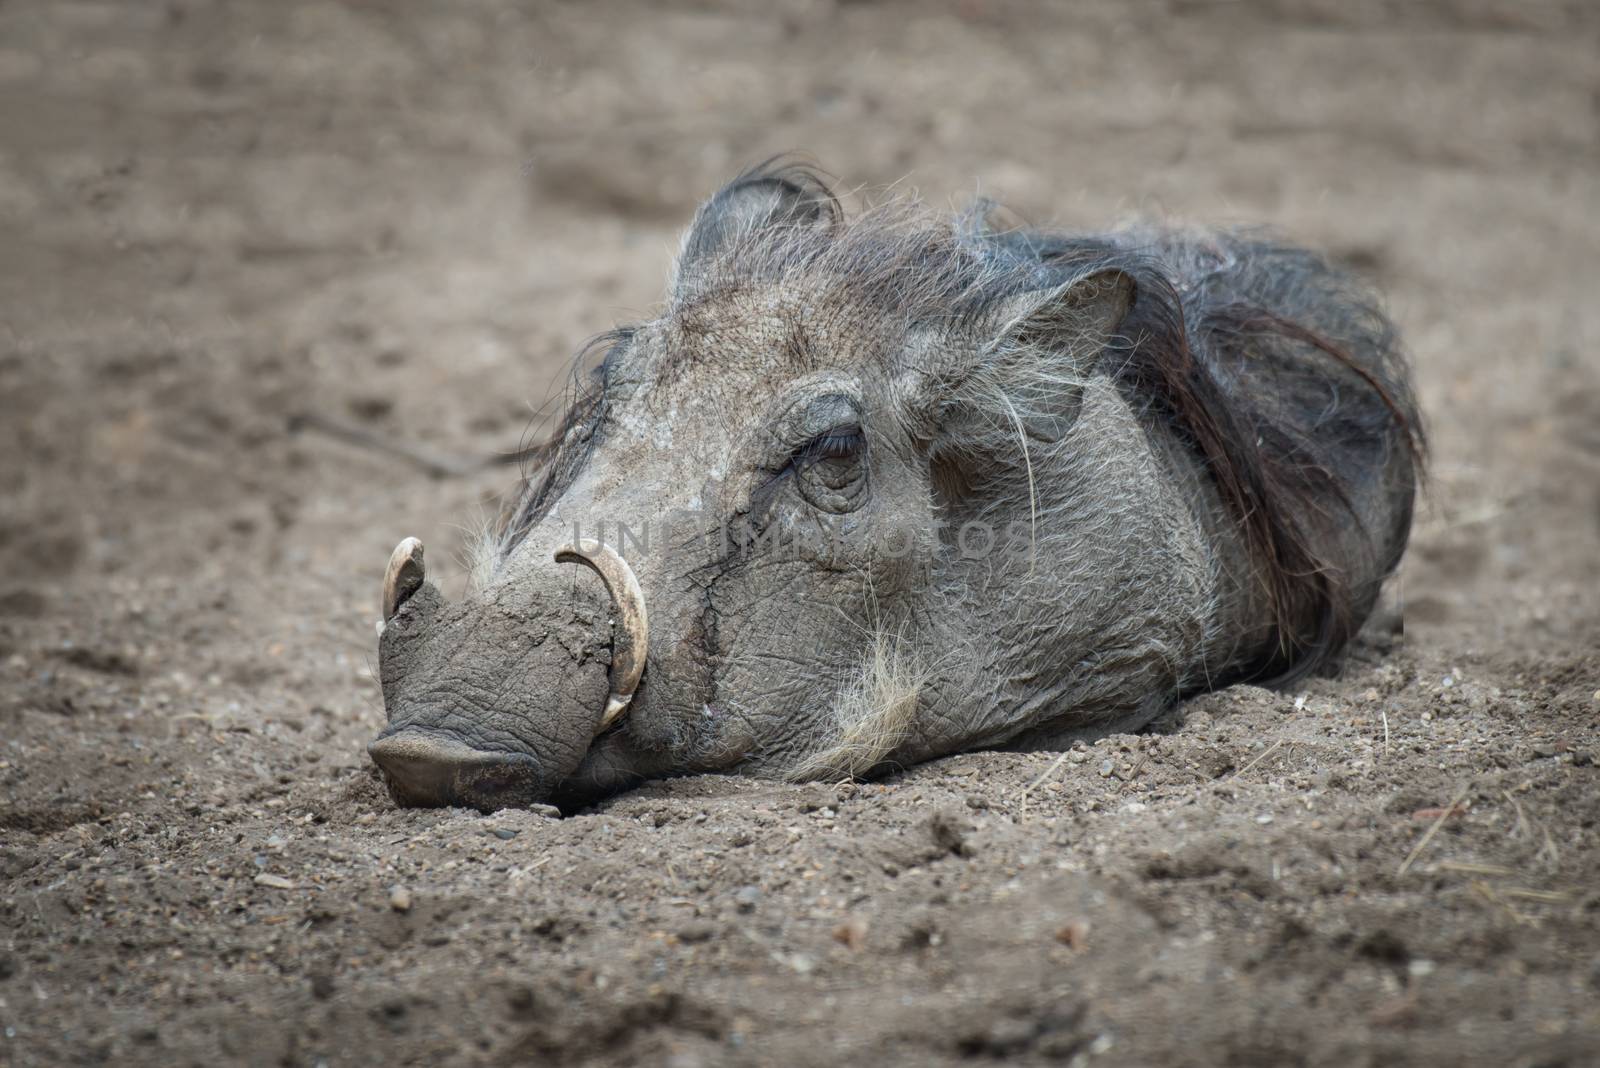 A wart hog lying on the ground asleep